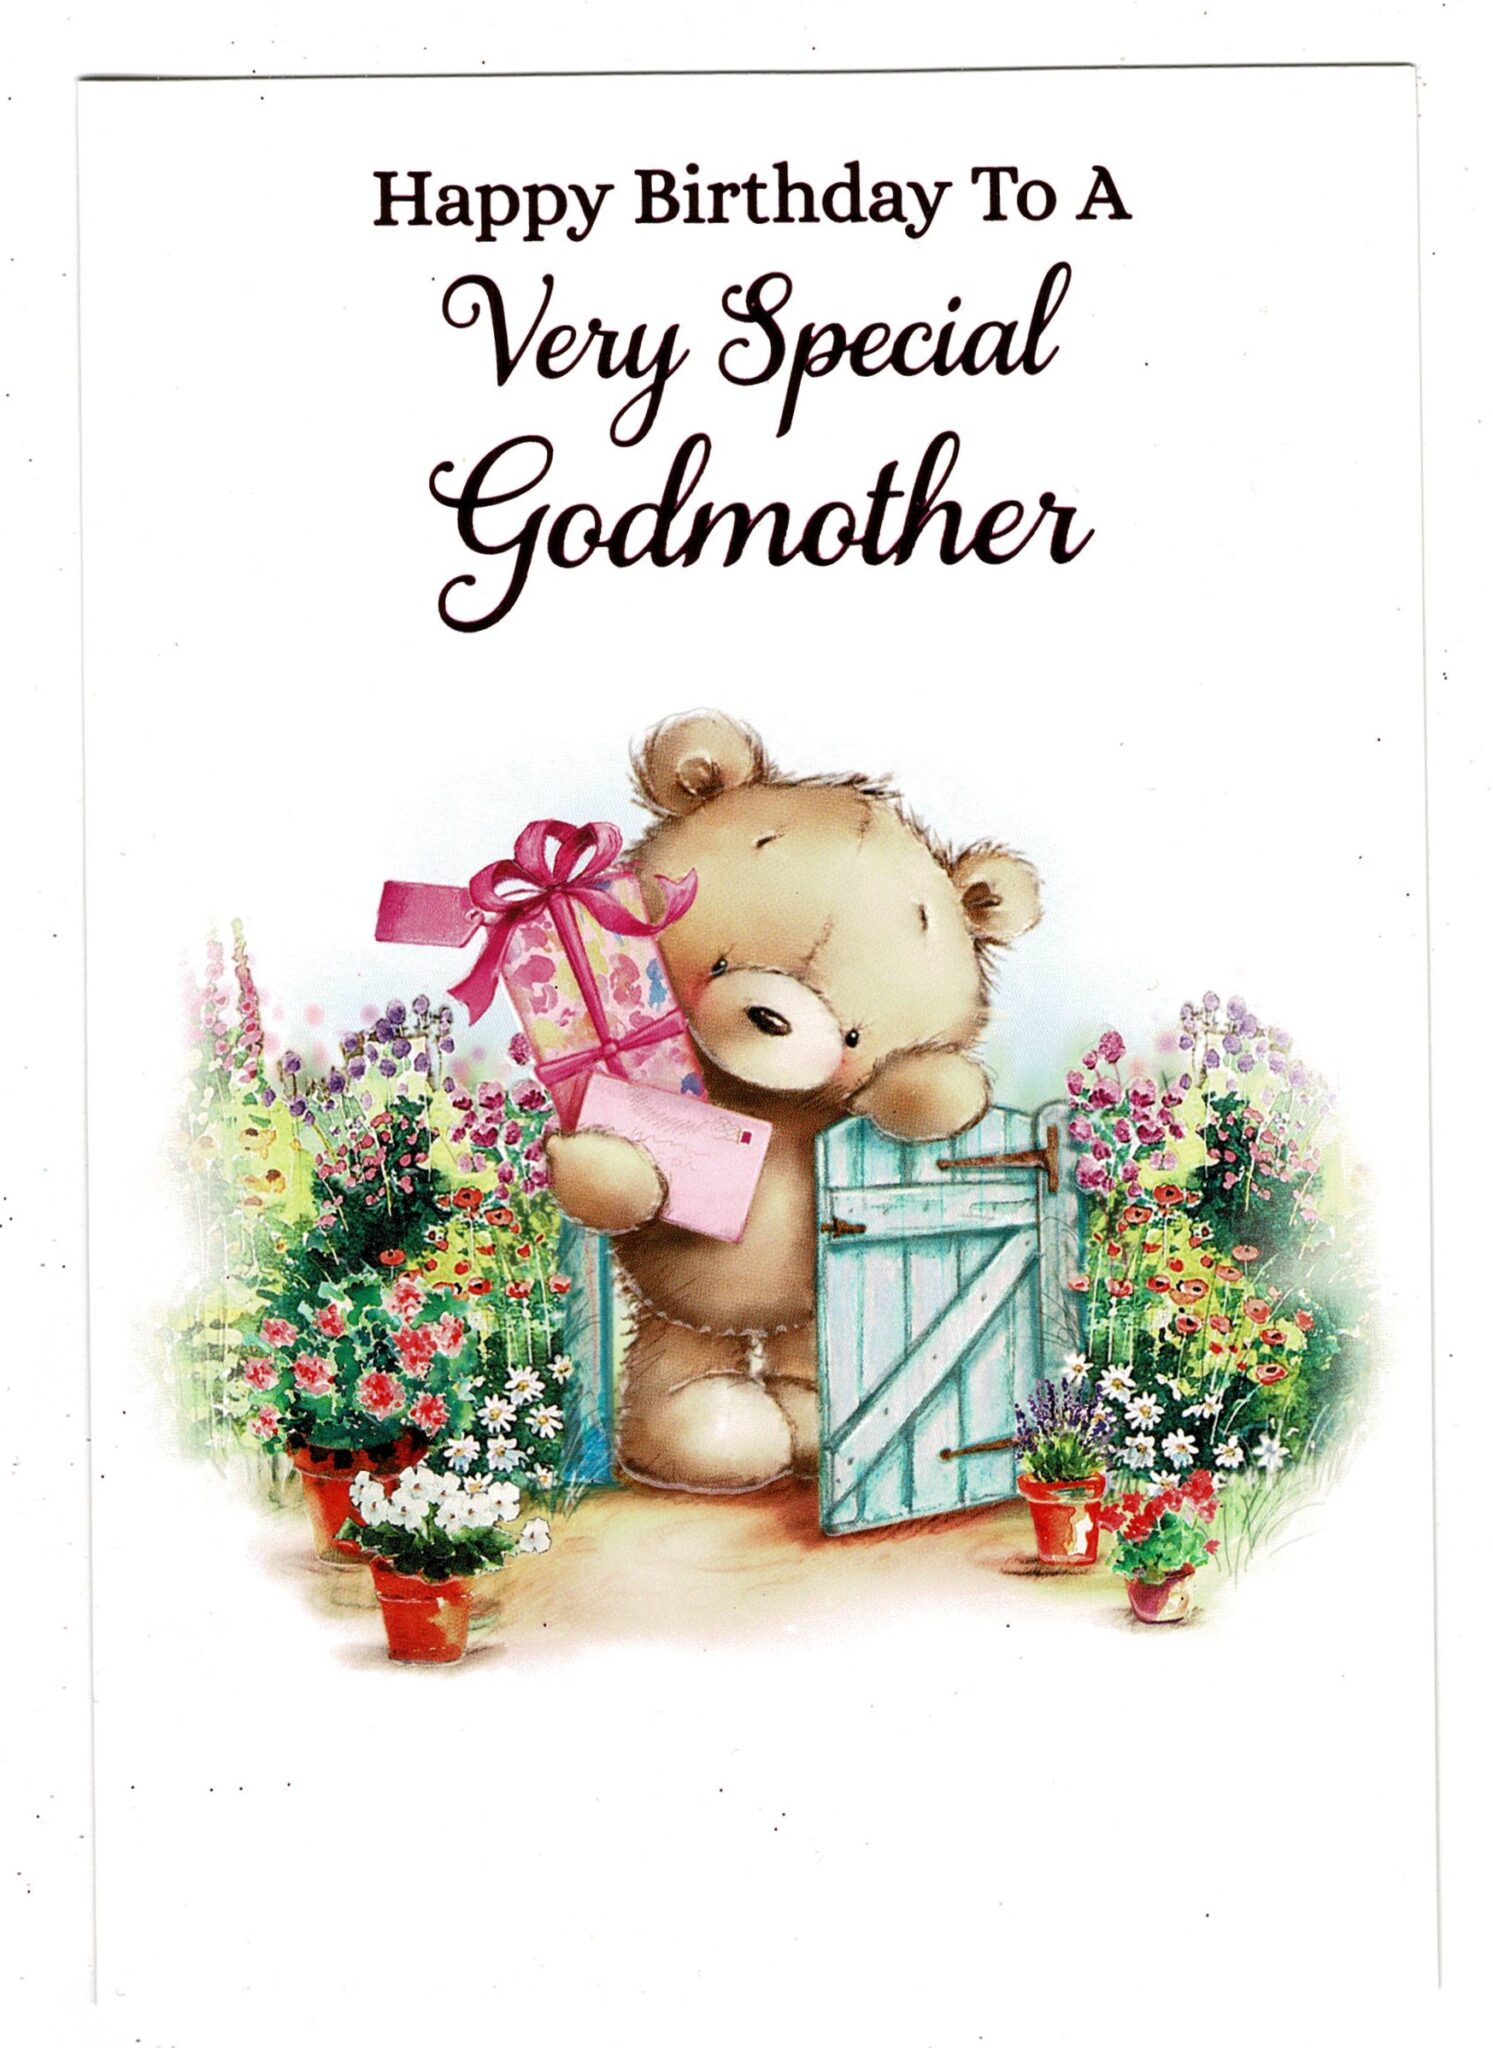 Godmother Birthday Card Special Godmother Cute Teddy Bear Design 14 x19